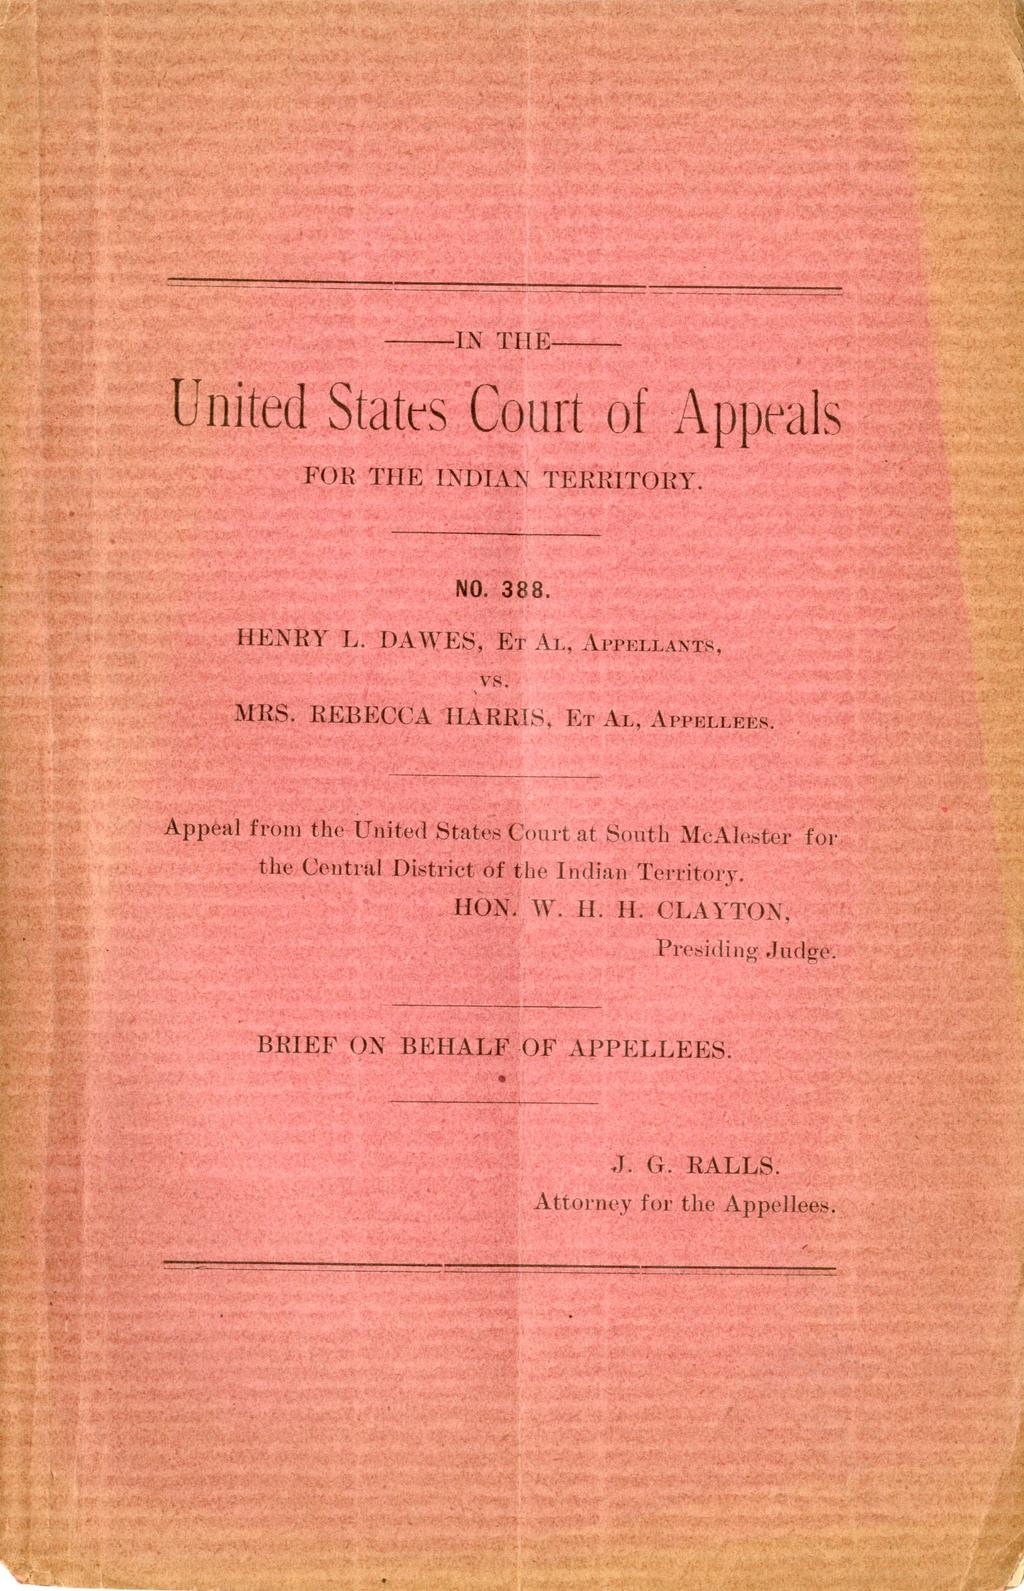 -IN THE- United States Court of Appeals FOE THE INDIAN TERRITORY. NO. 388. HENRY L. DAWES, ET AL, APPELLANTS, MRS. REBECCA vs. HARRIS, ET AL, APPELLEES.